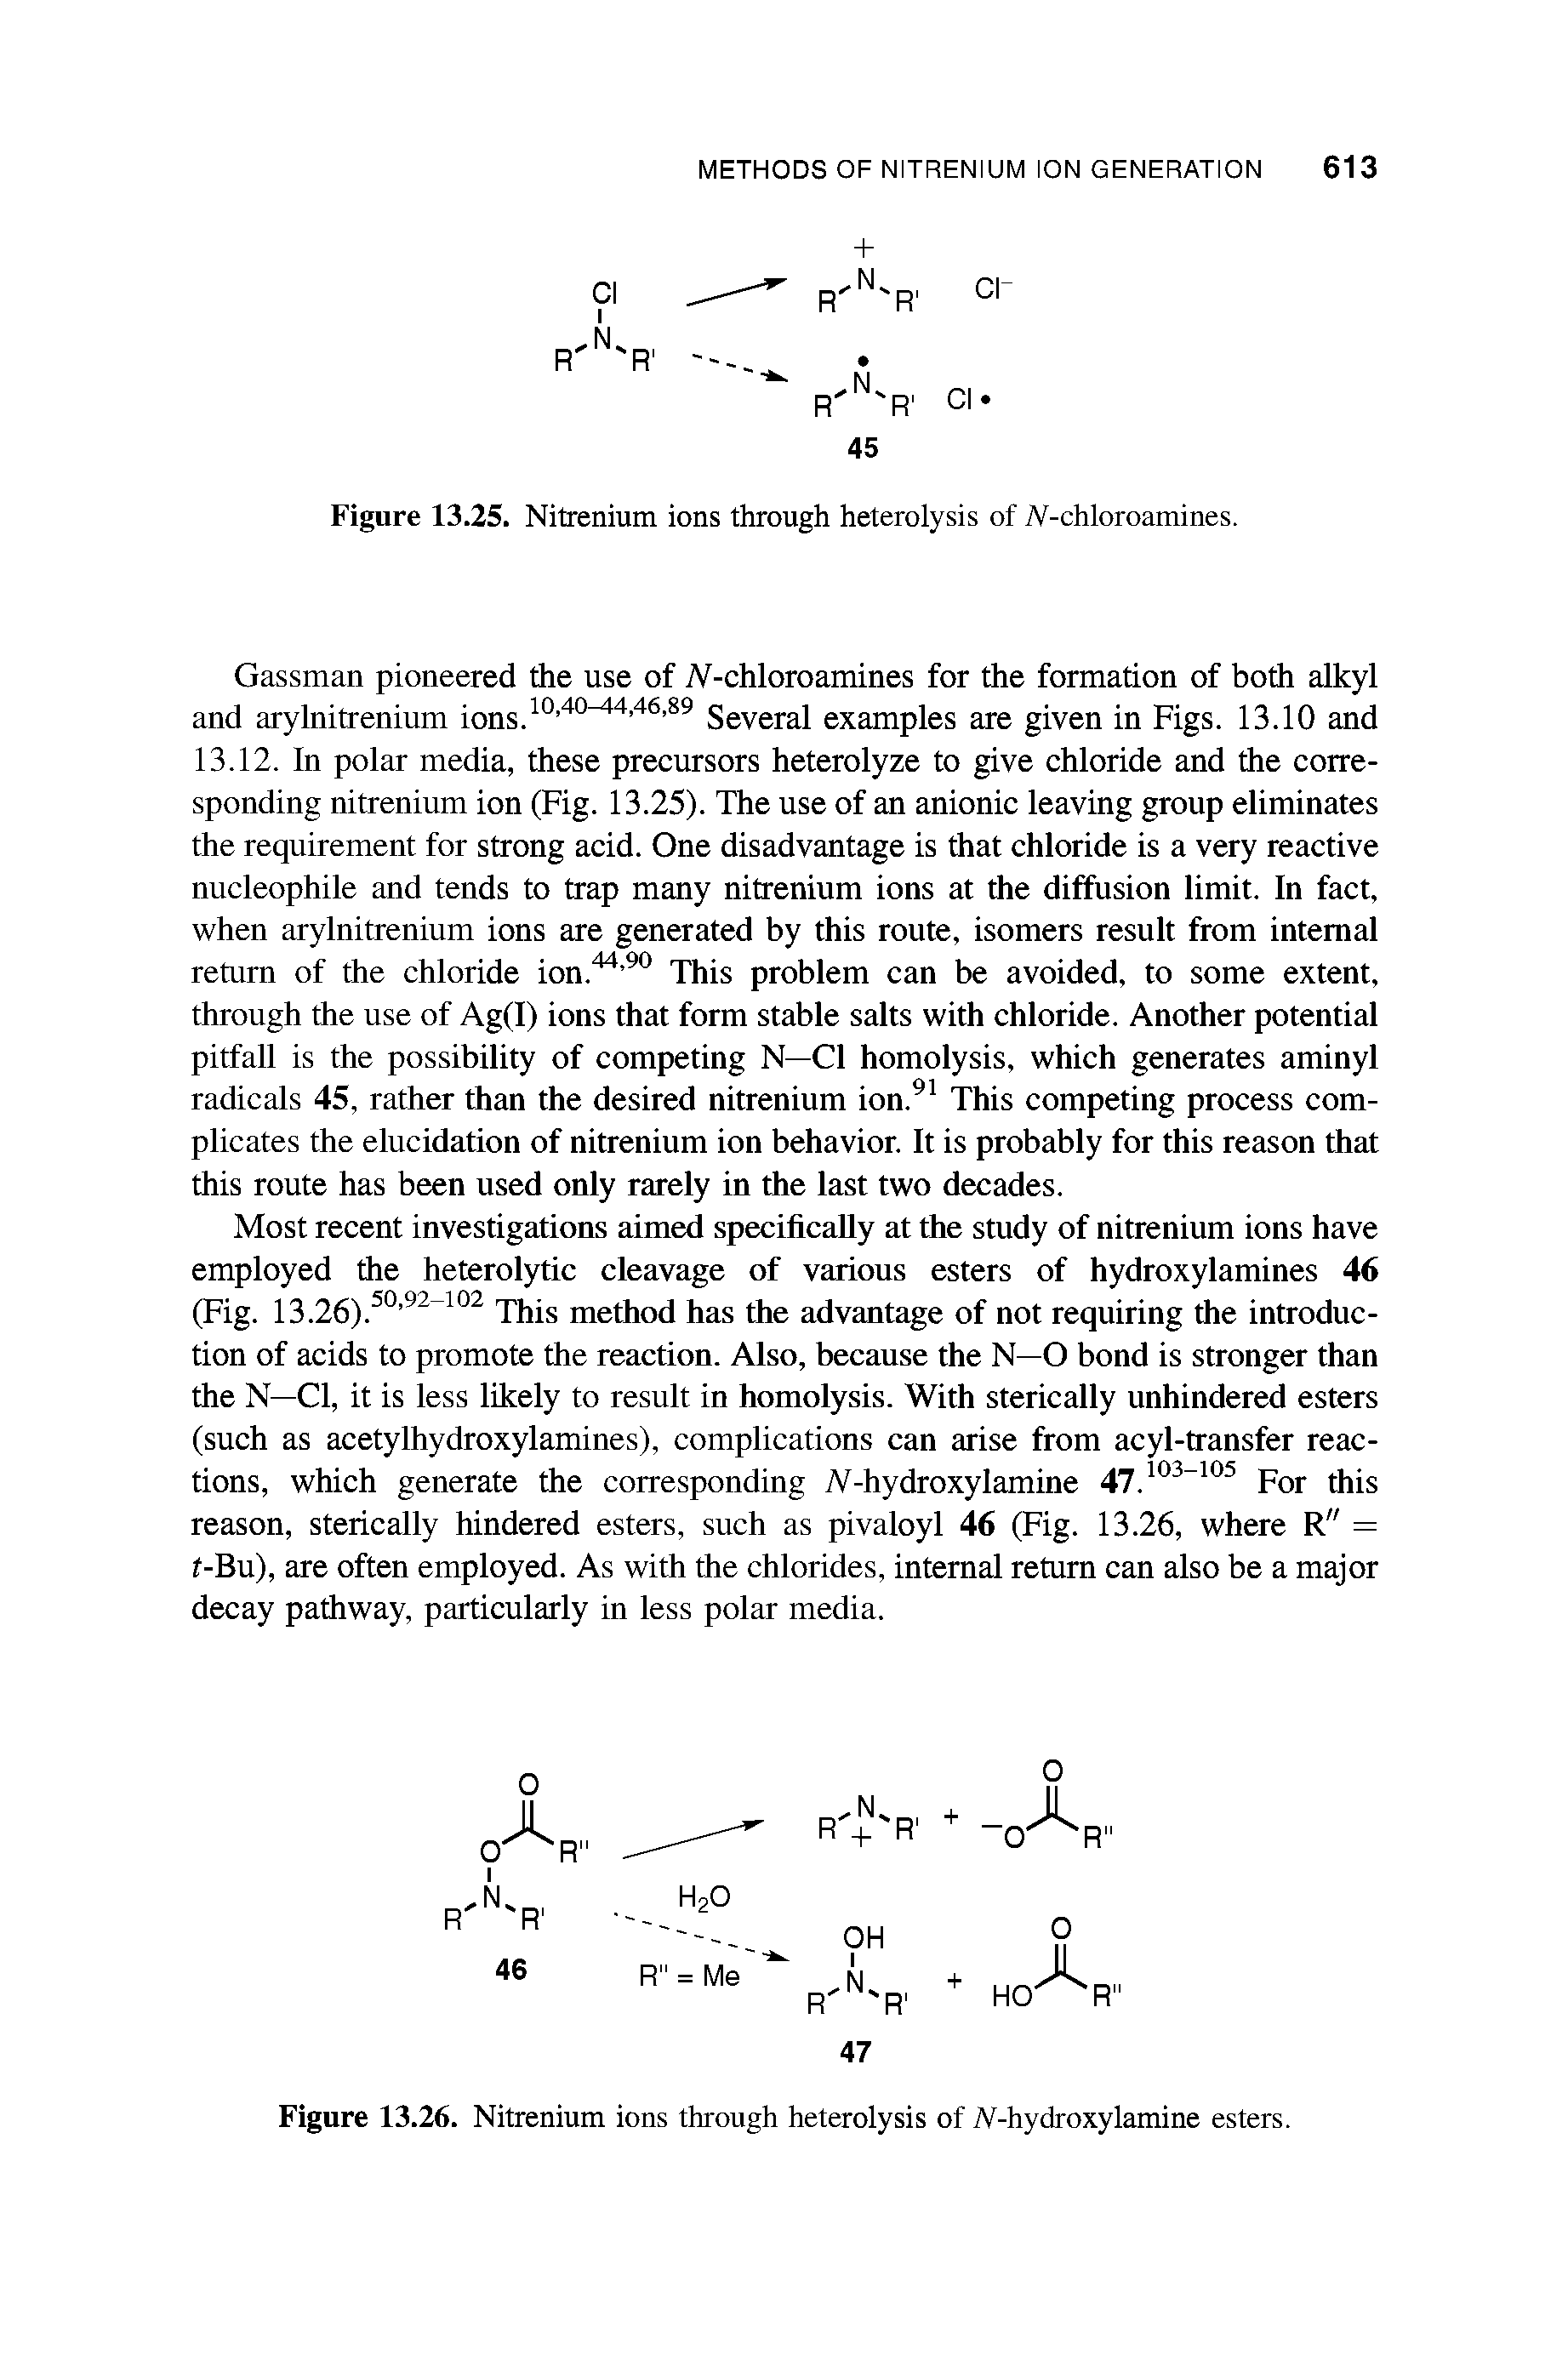 Figure 13.26. Nitrenium ions through heterolysis of A-hydroxylamine esters.